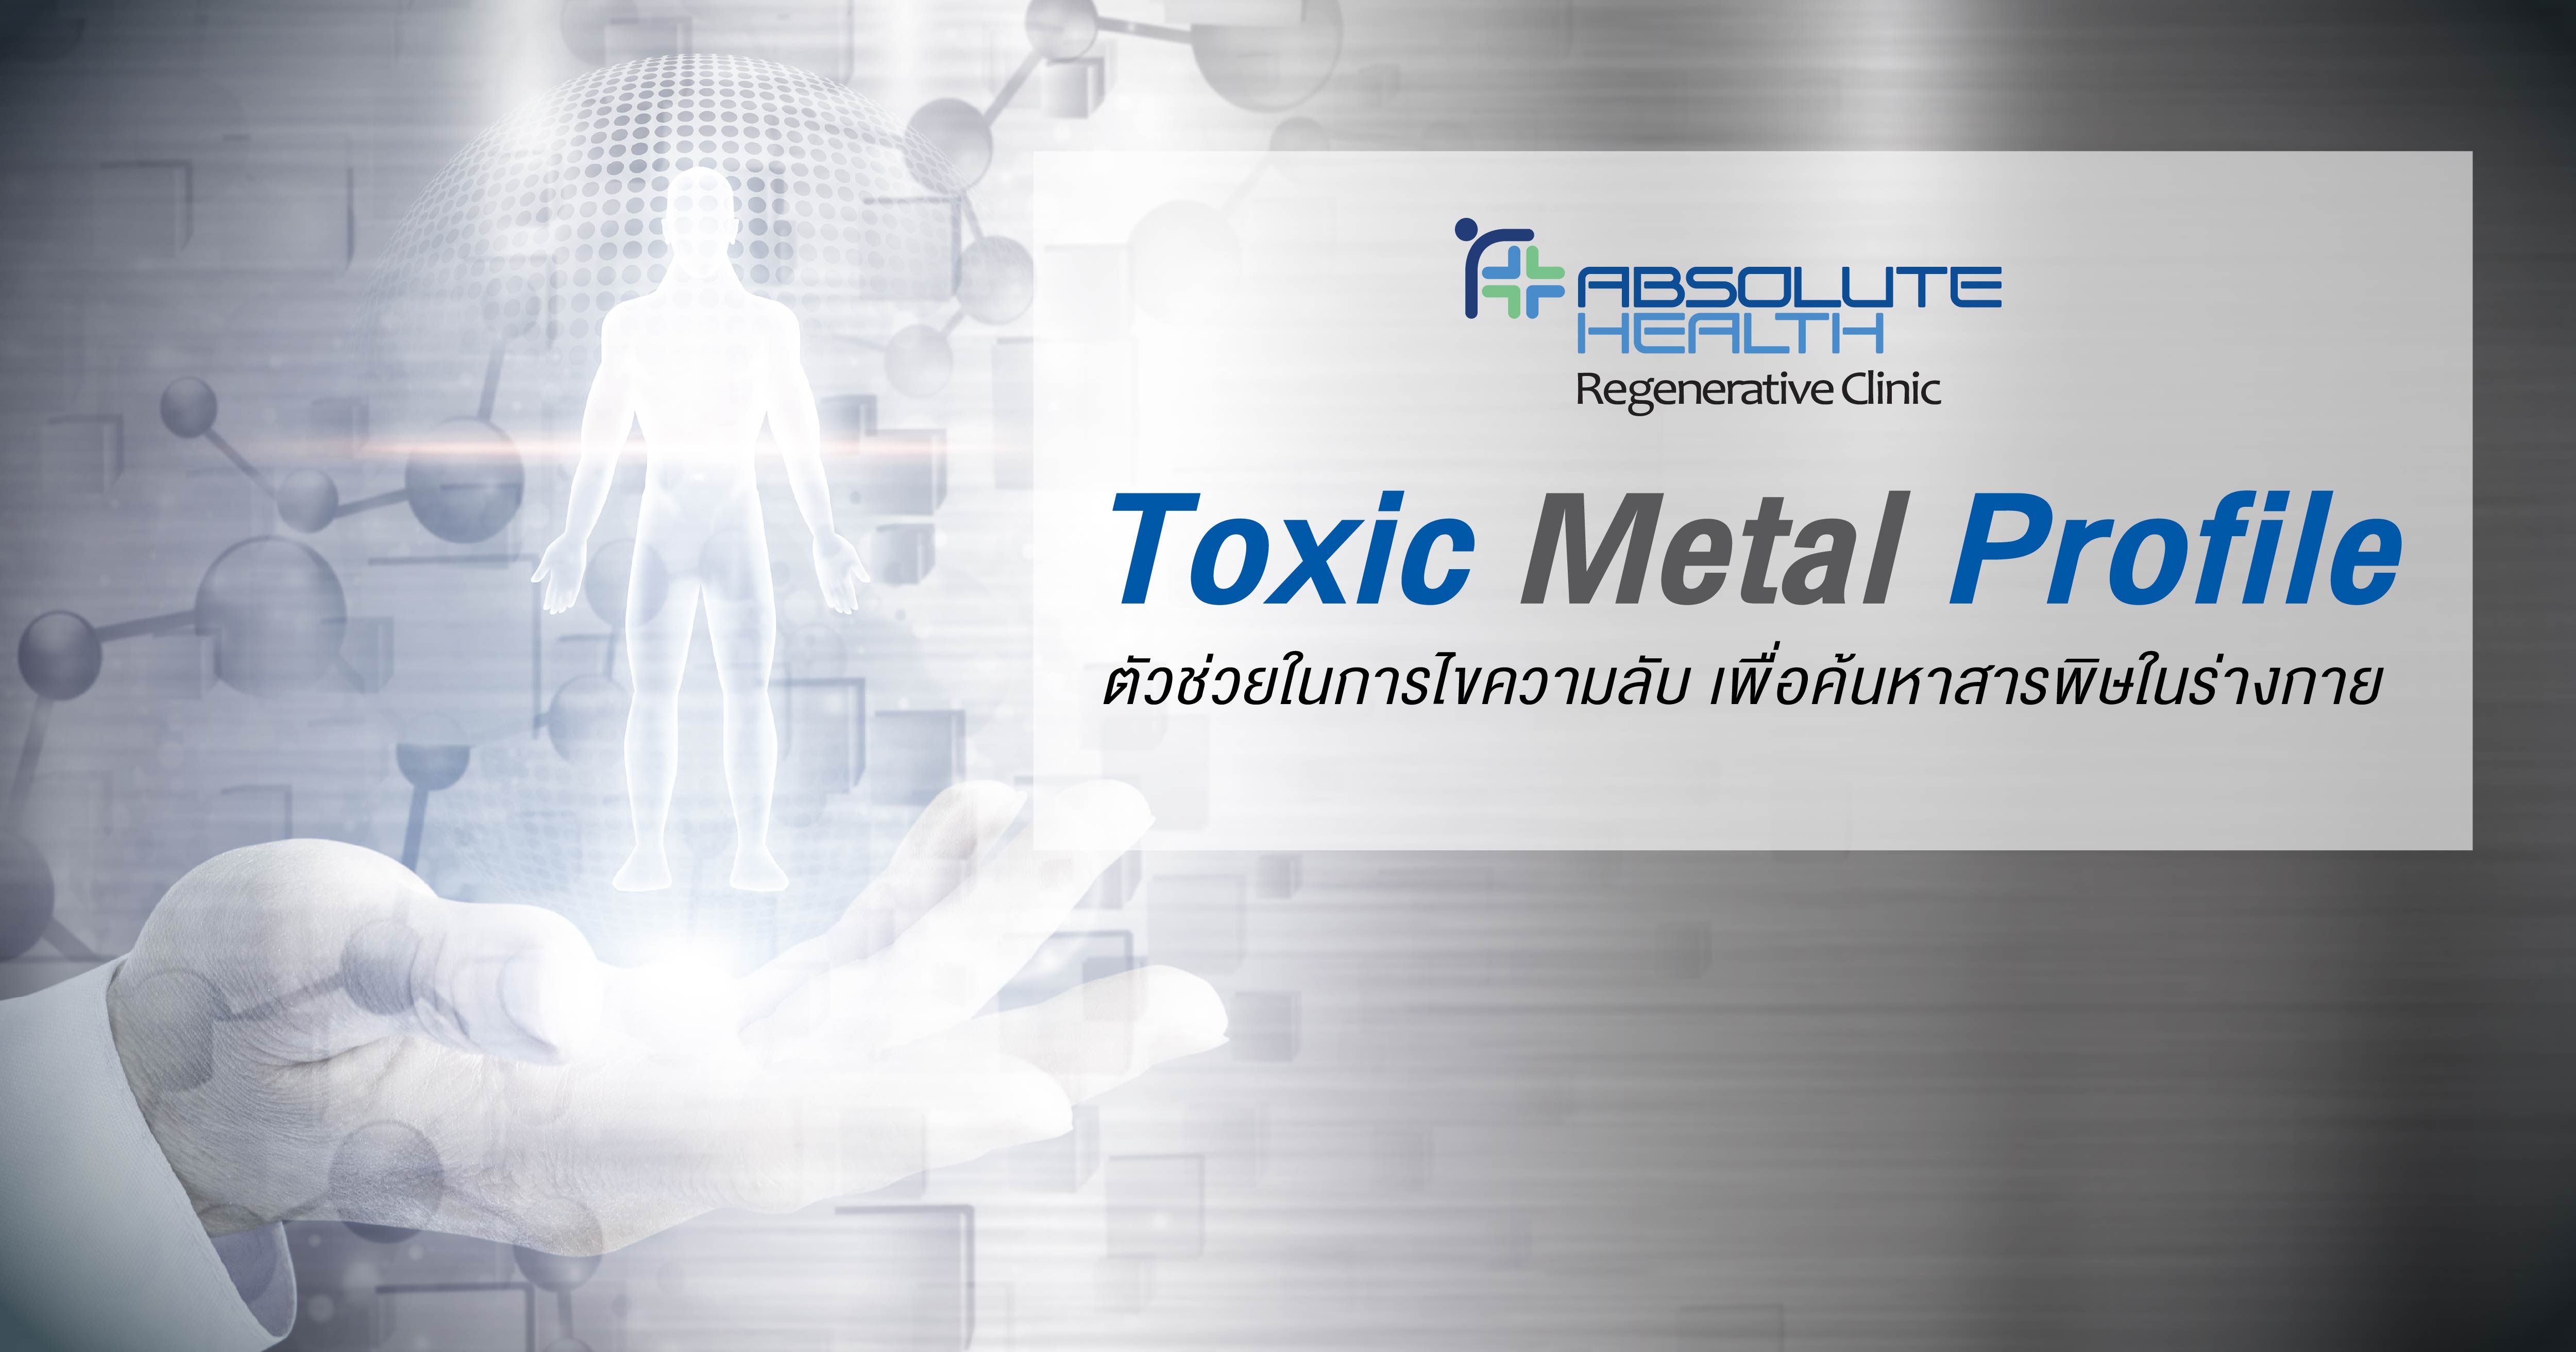 Toxic Metal Profile: Detox solution 